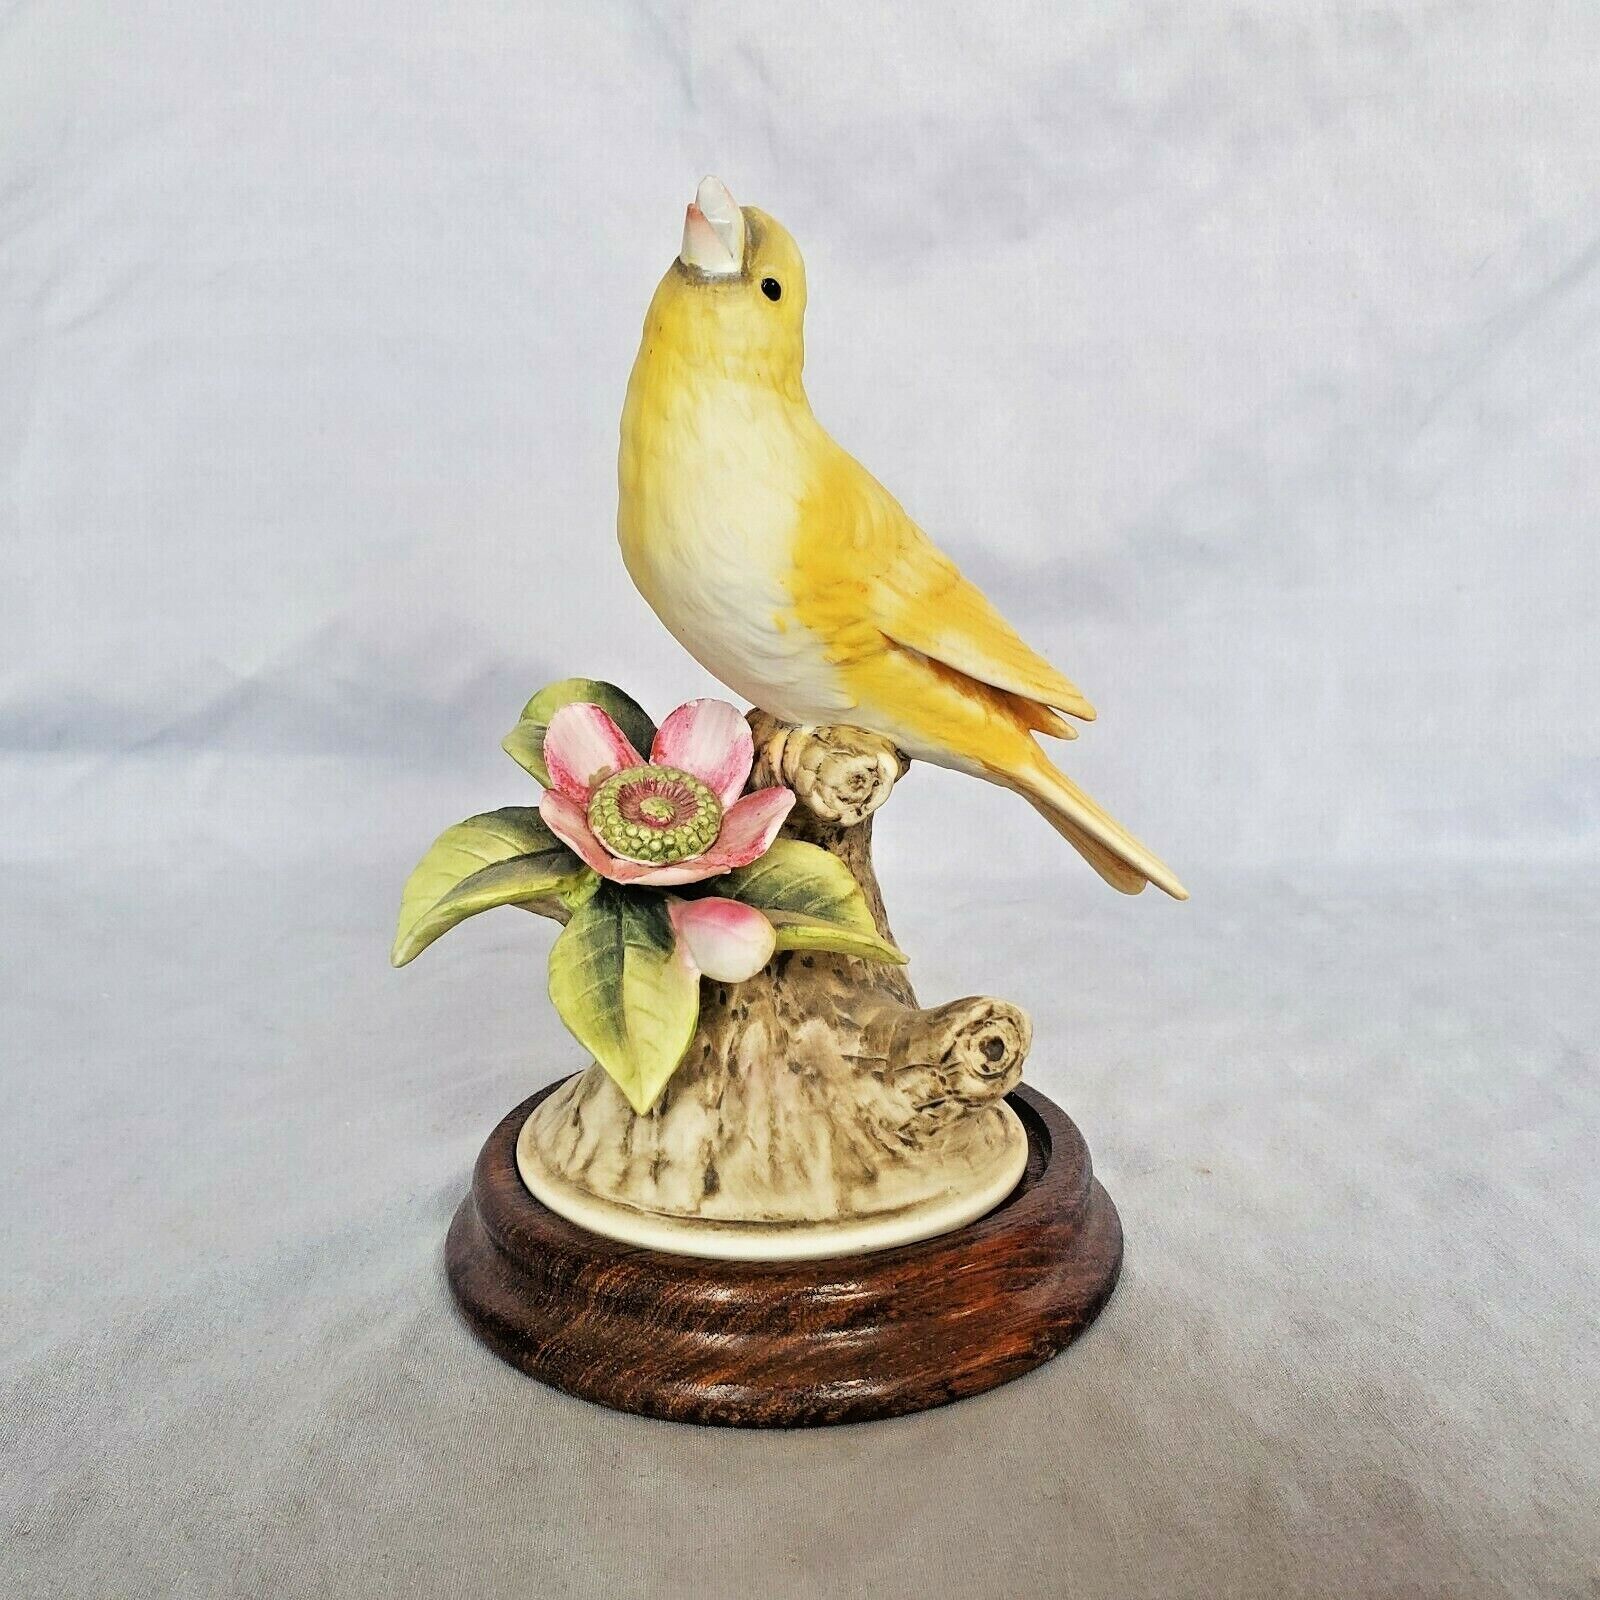 Bird Figurine by Andrea by Sadek - Canary or Robin, Your Choice